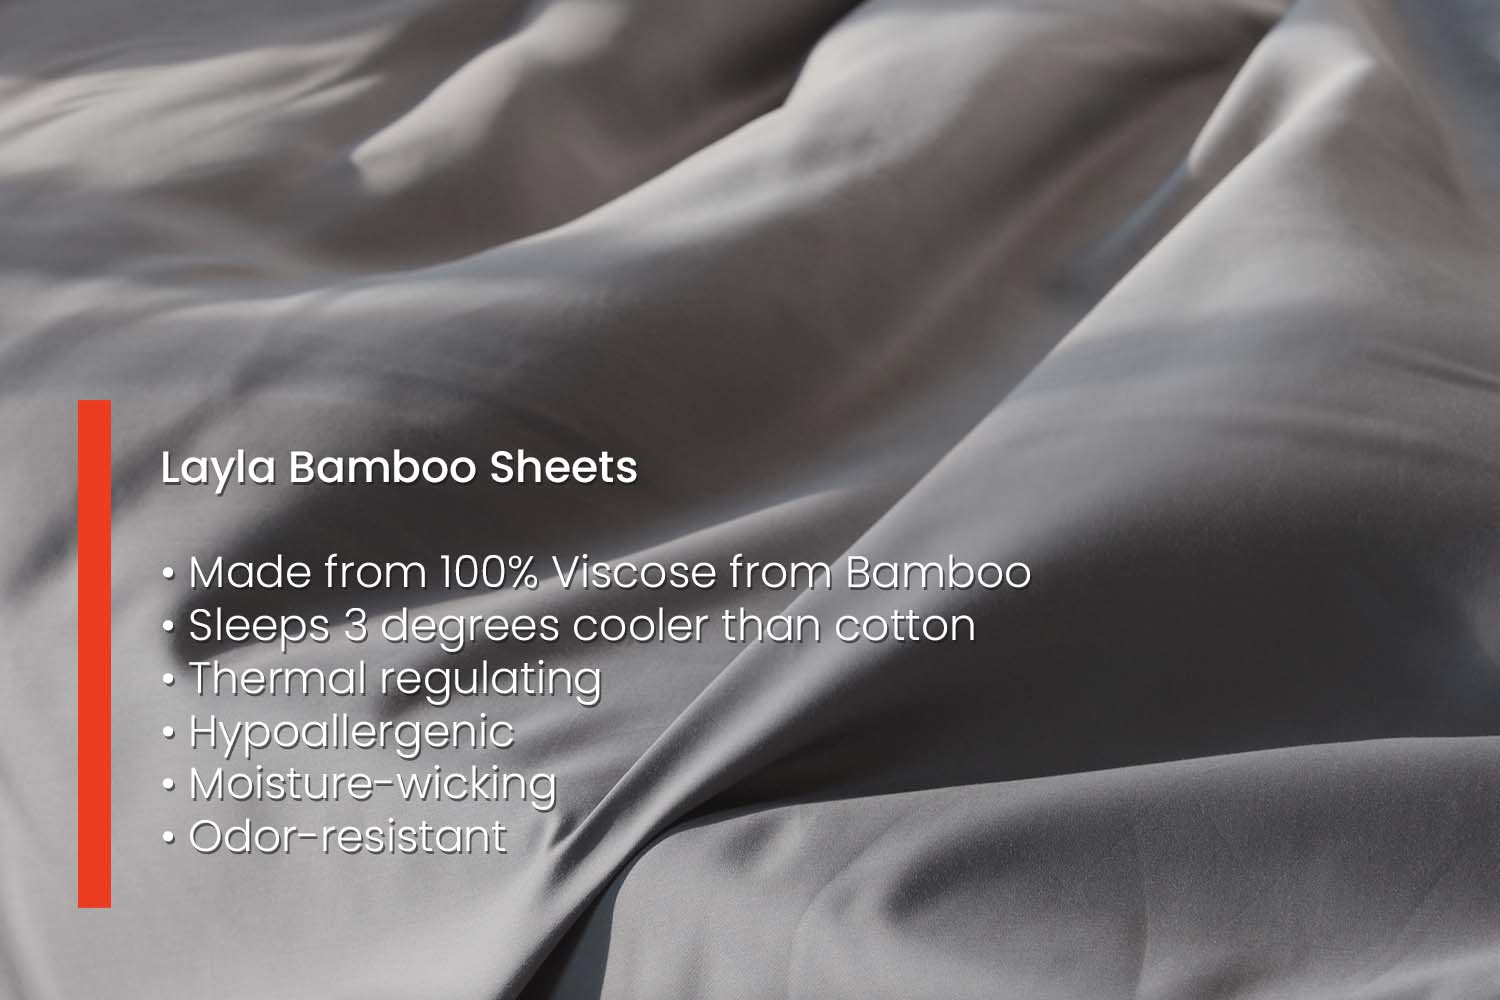 Layla Bamboo Sheets